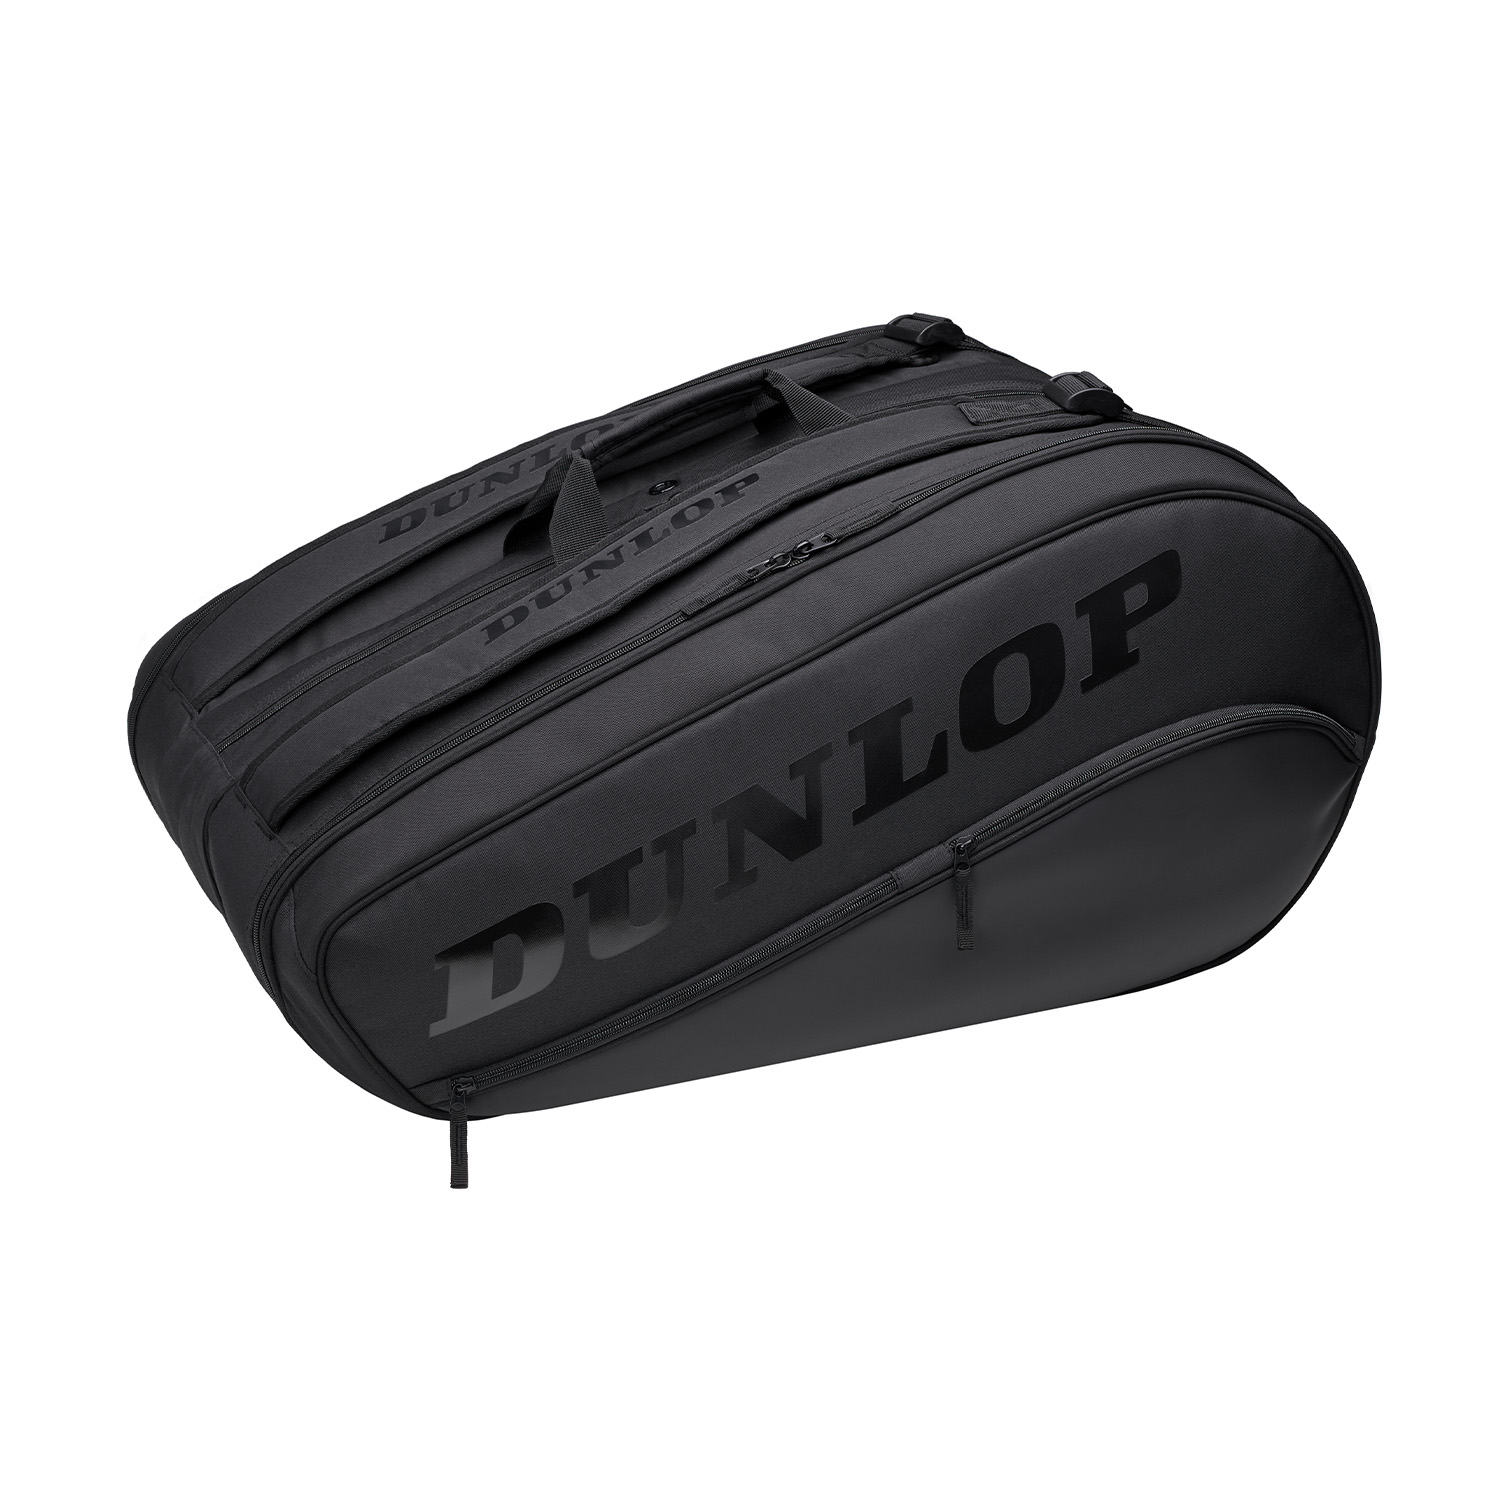 Dunlop Team X 12 Thermo Borsa - Black